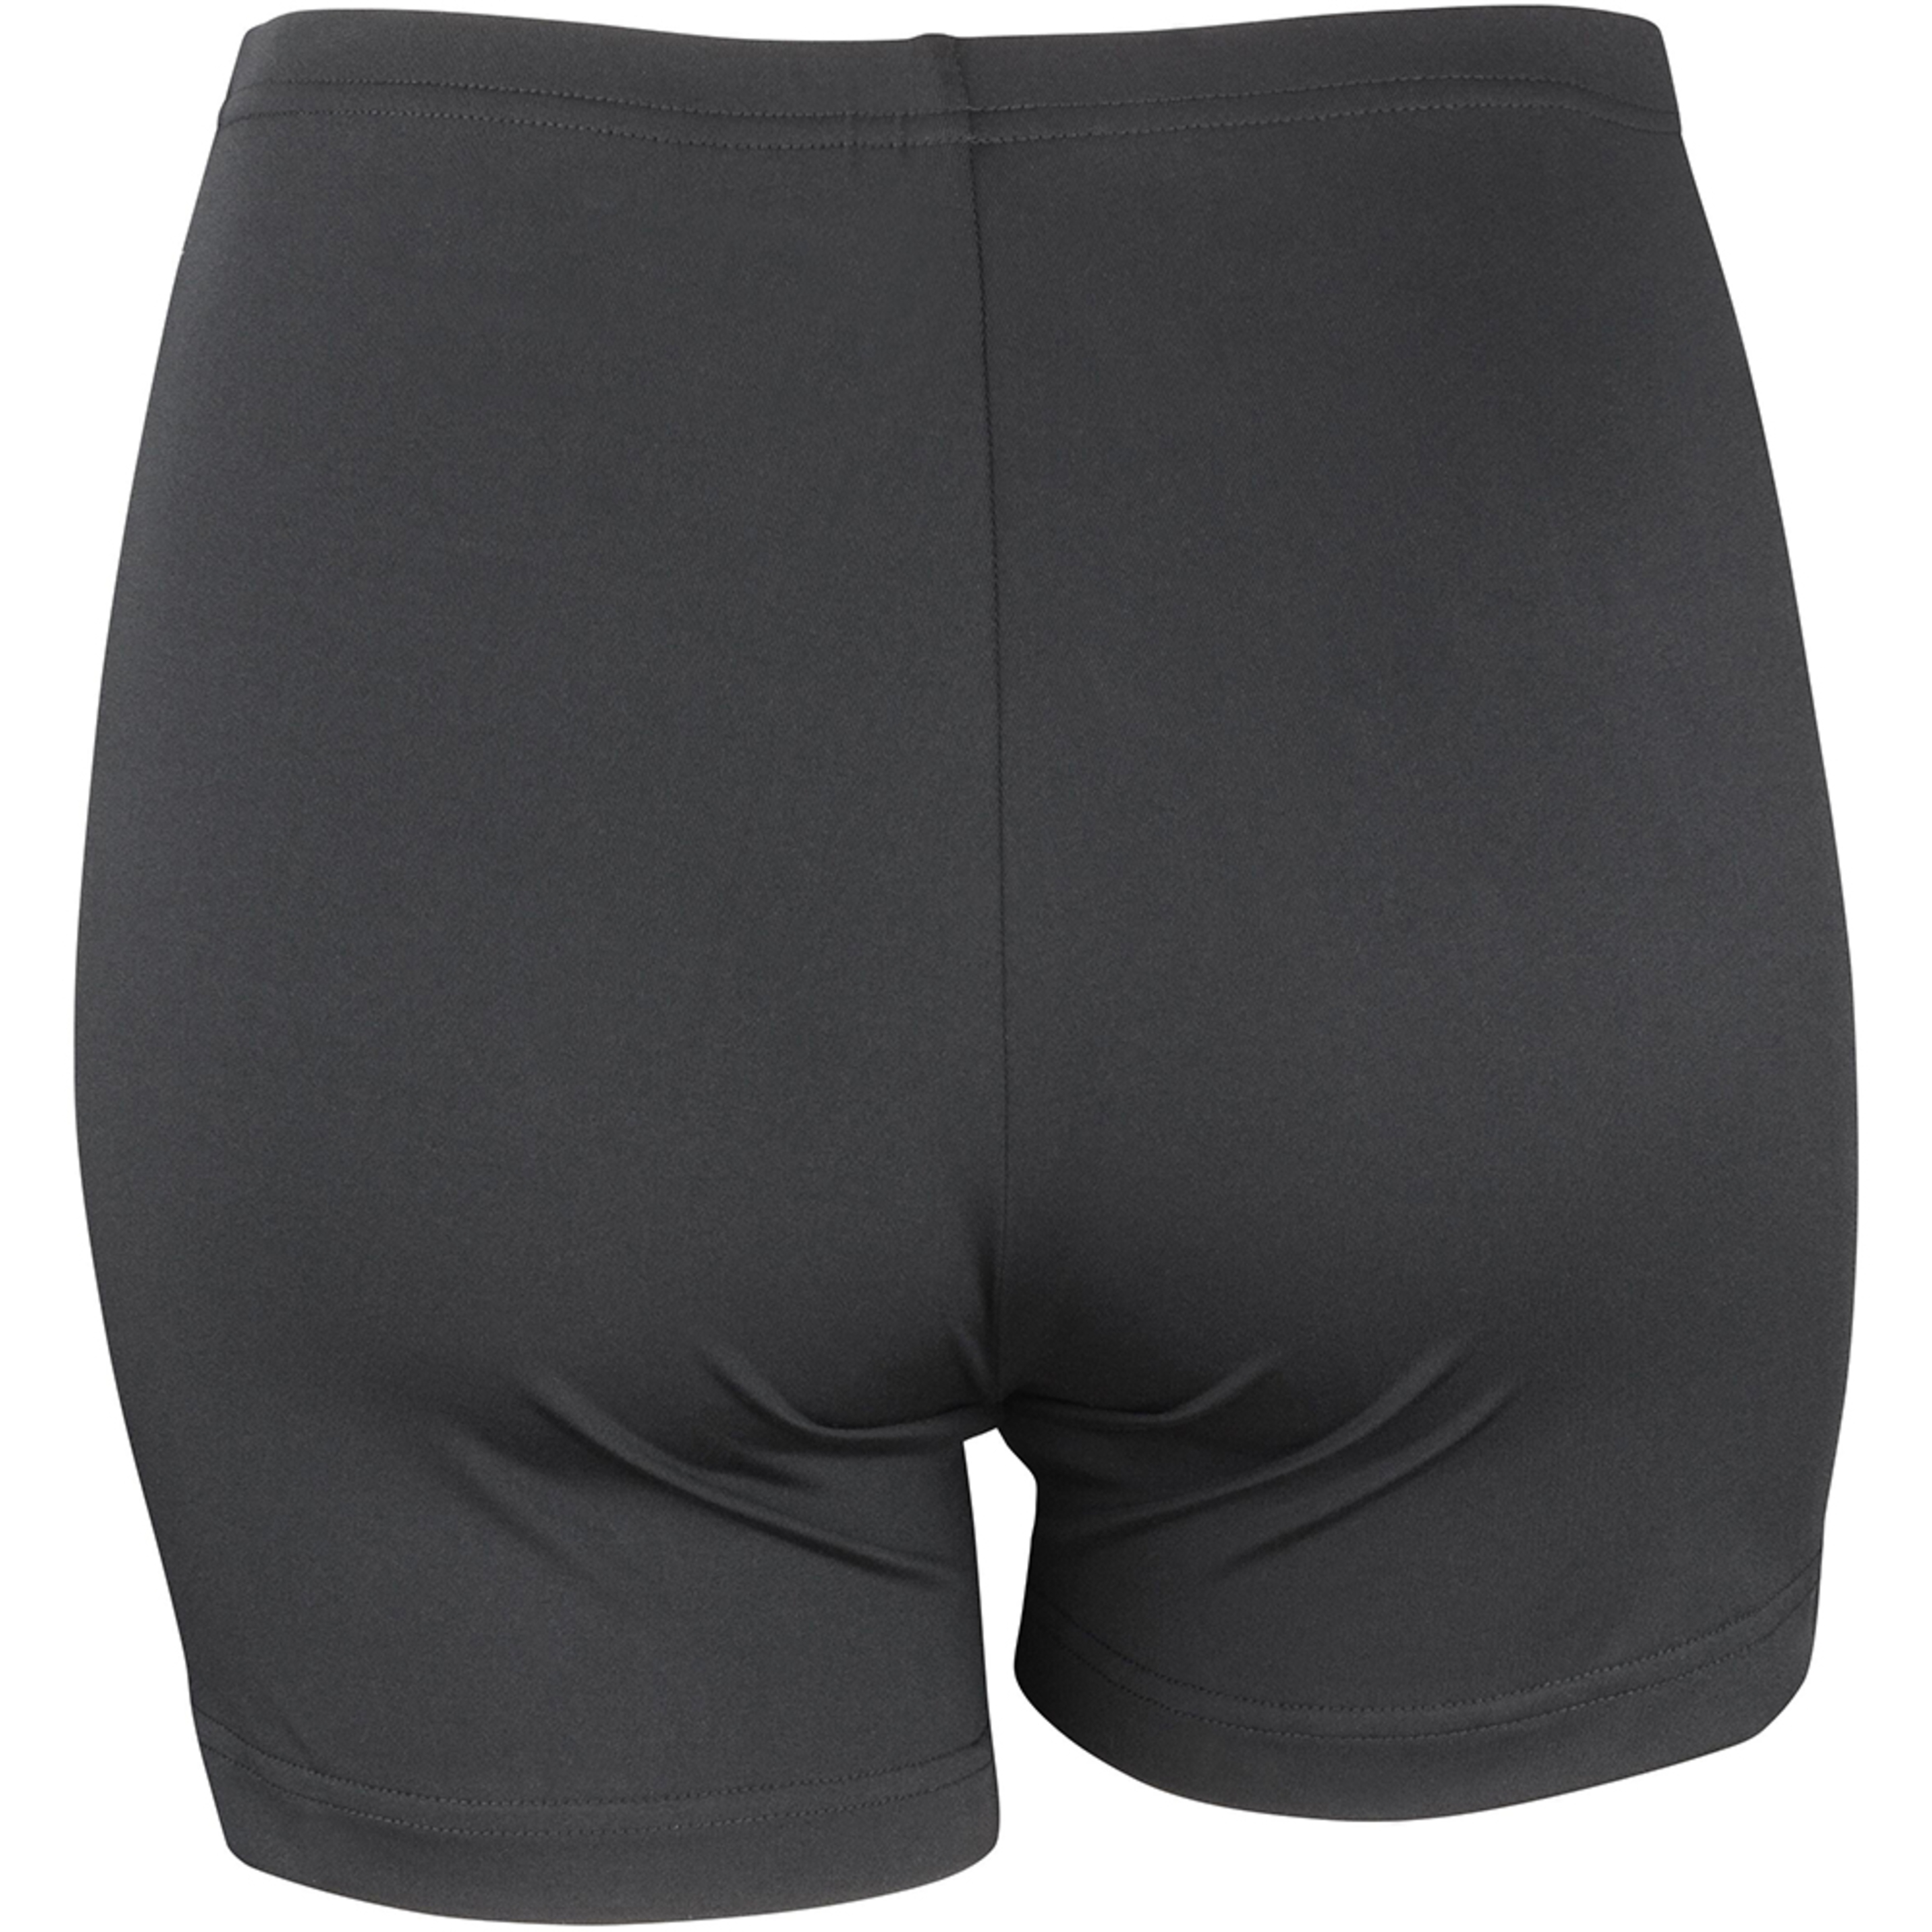 Pantalones Cortos Elásticos Modelo Softex Spiro - Negro  MKP